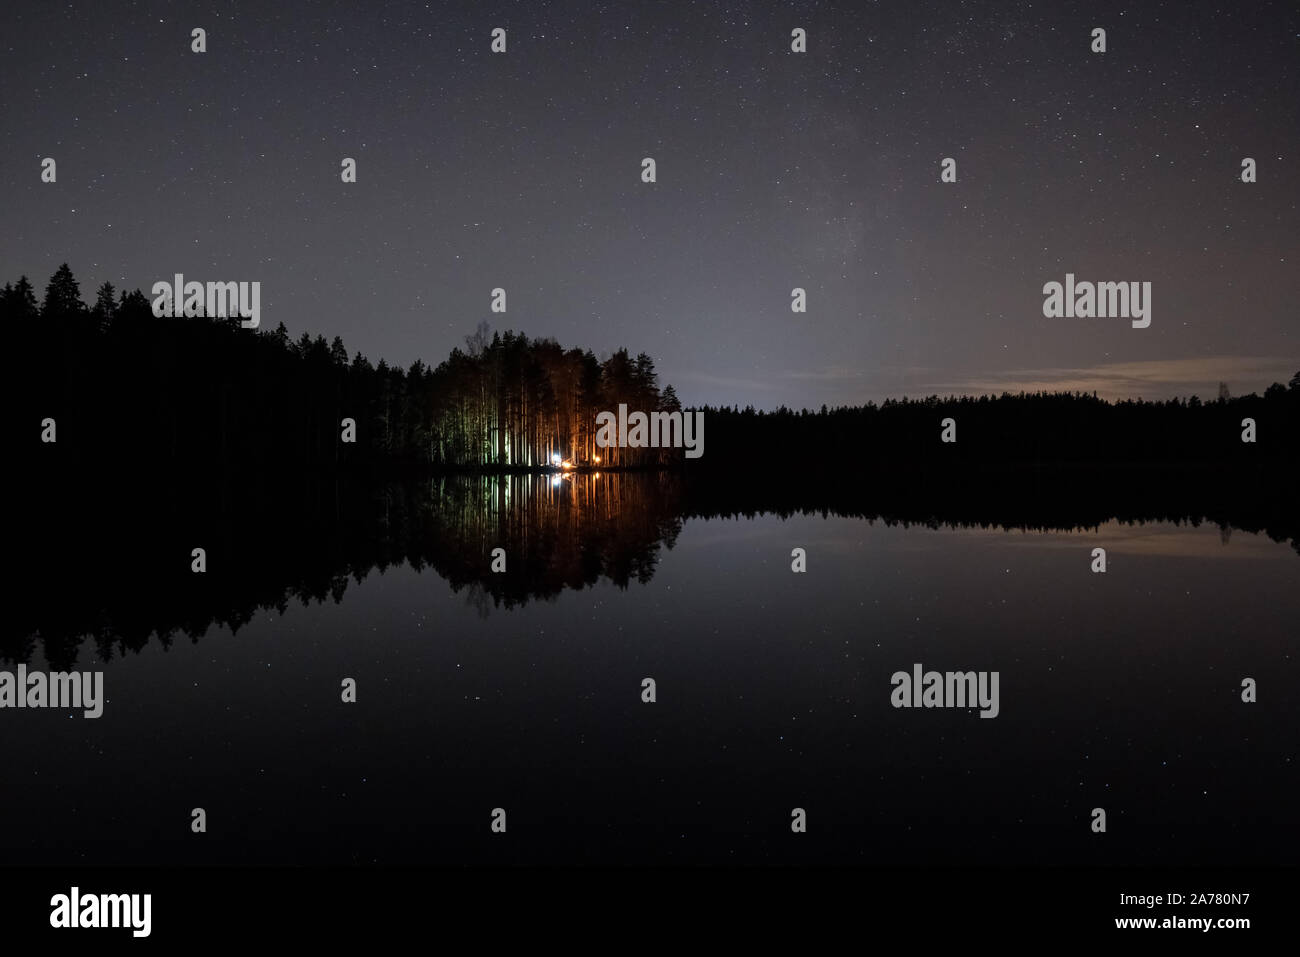 Campfires and Milky Way seen in Nuuksio National Park, Vihti, Finland Stock Photo